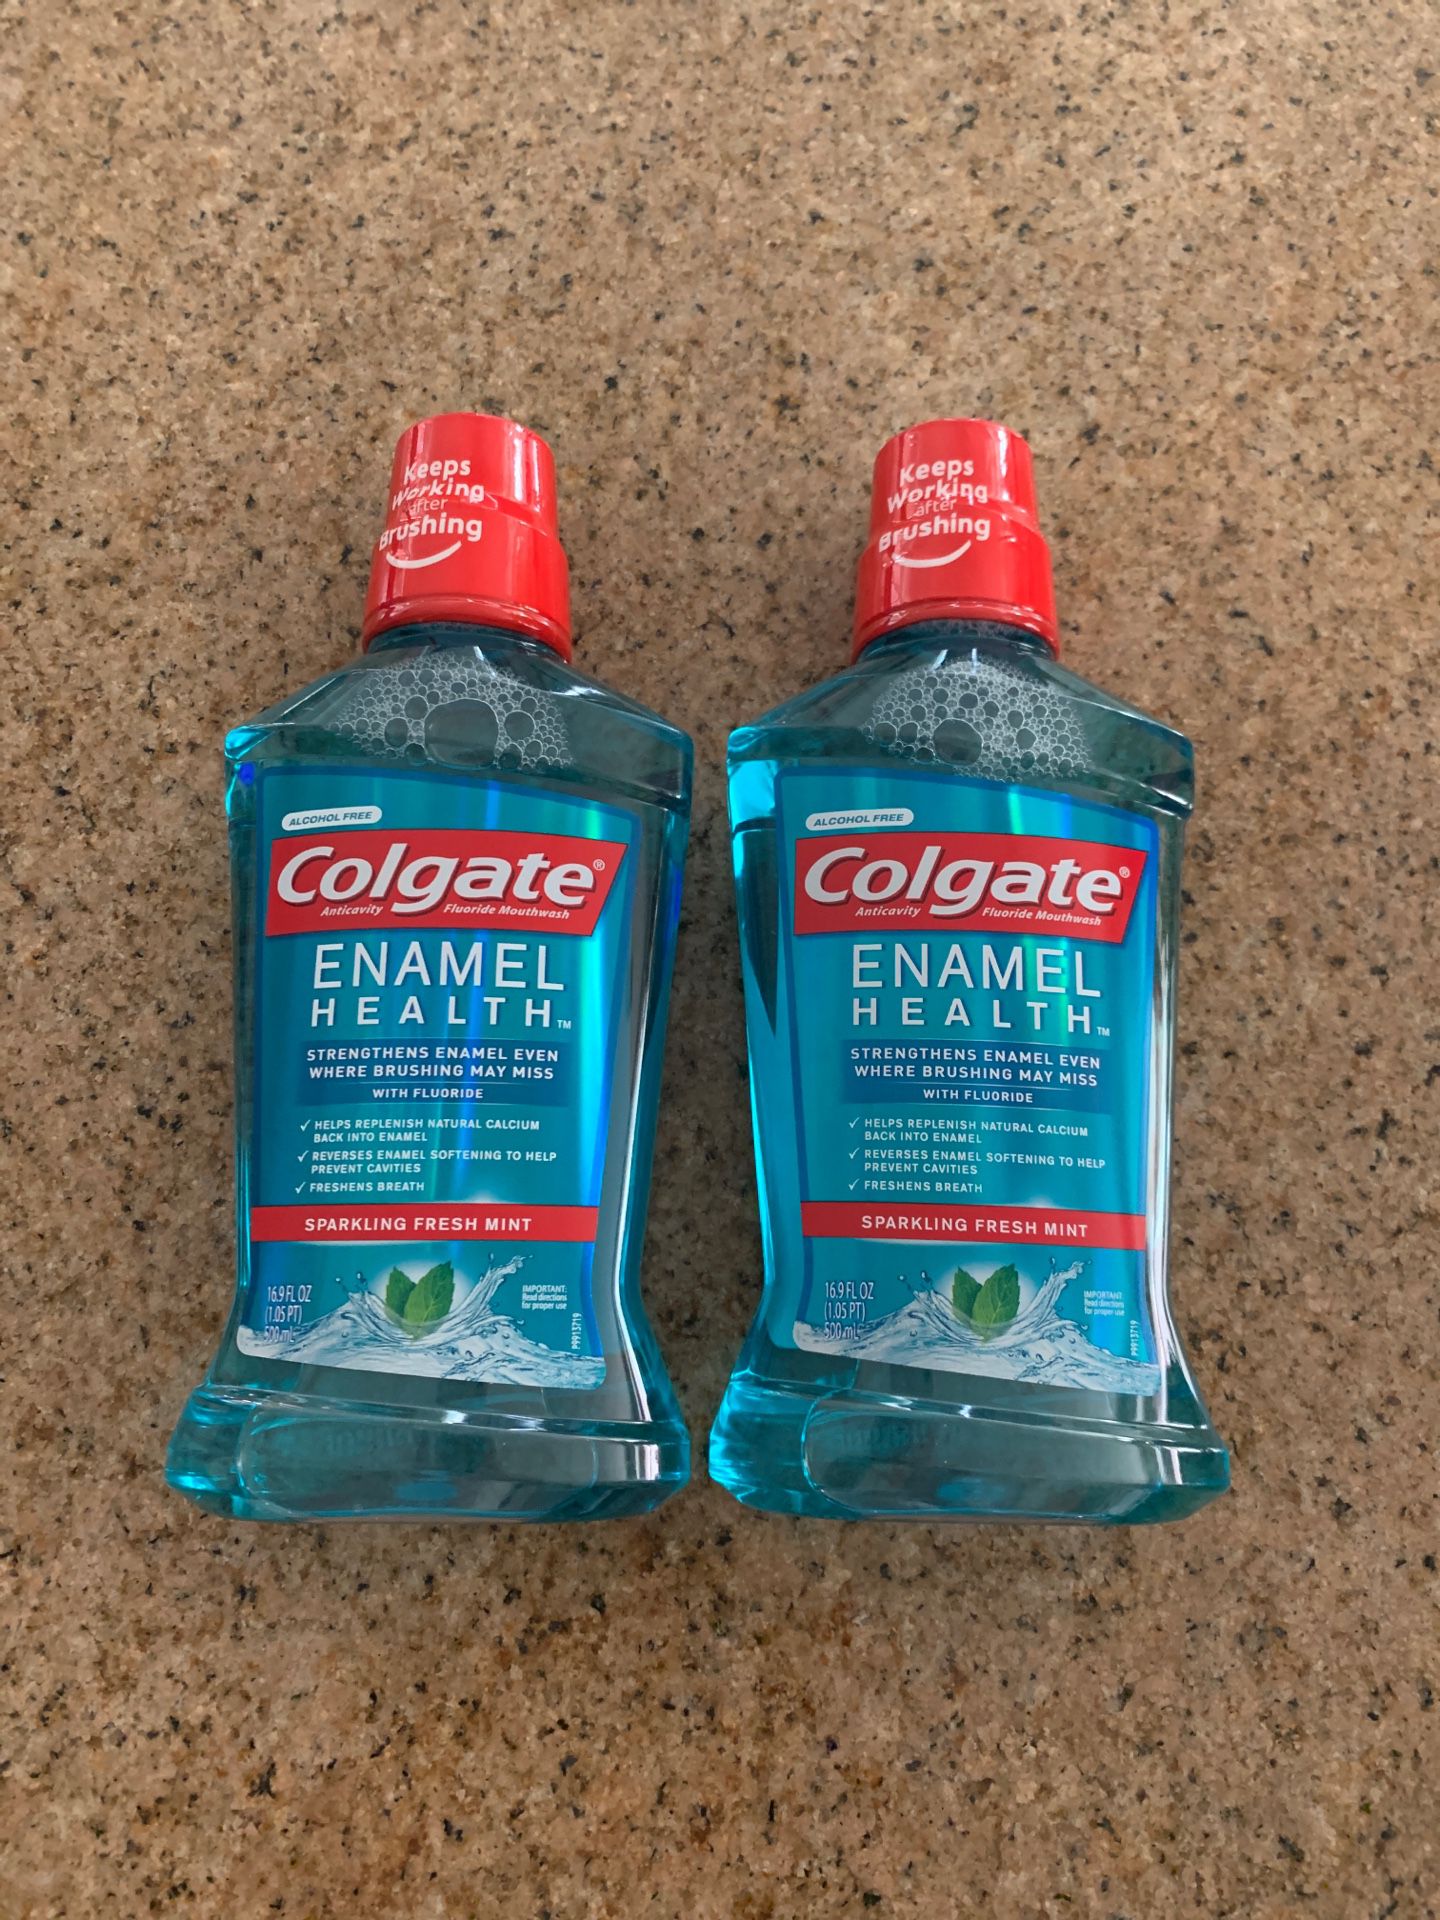 Colgate Enamel Health mouth wash